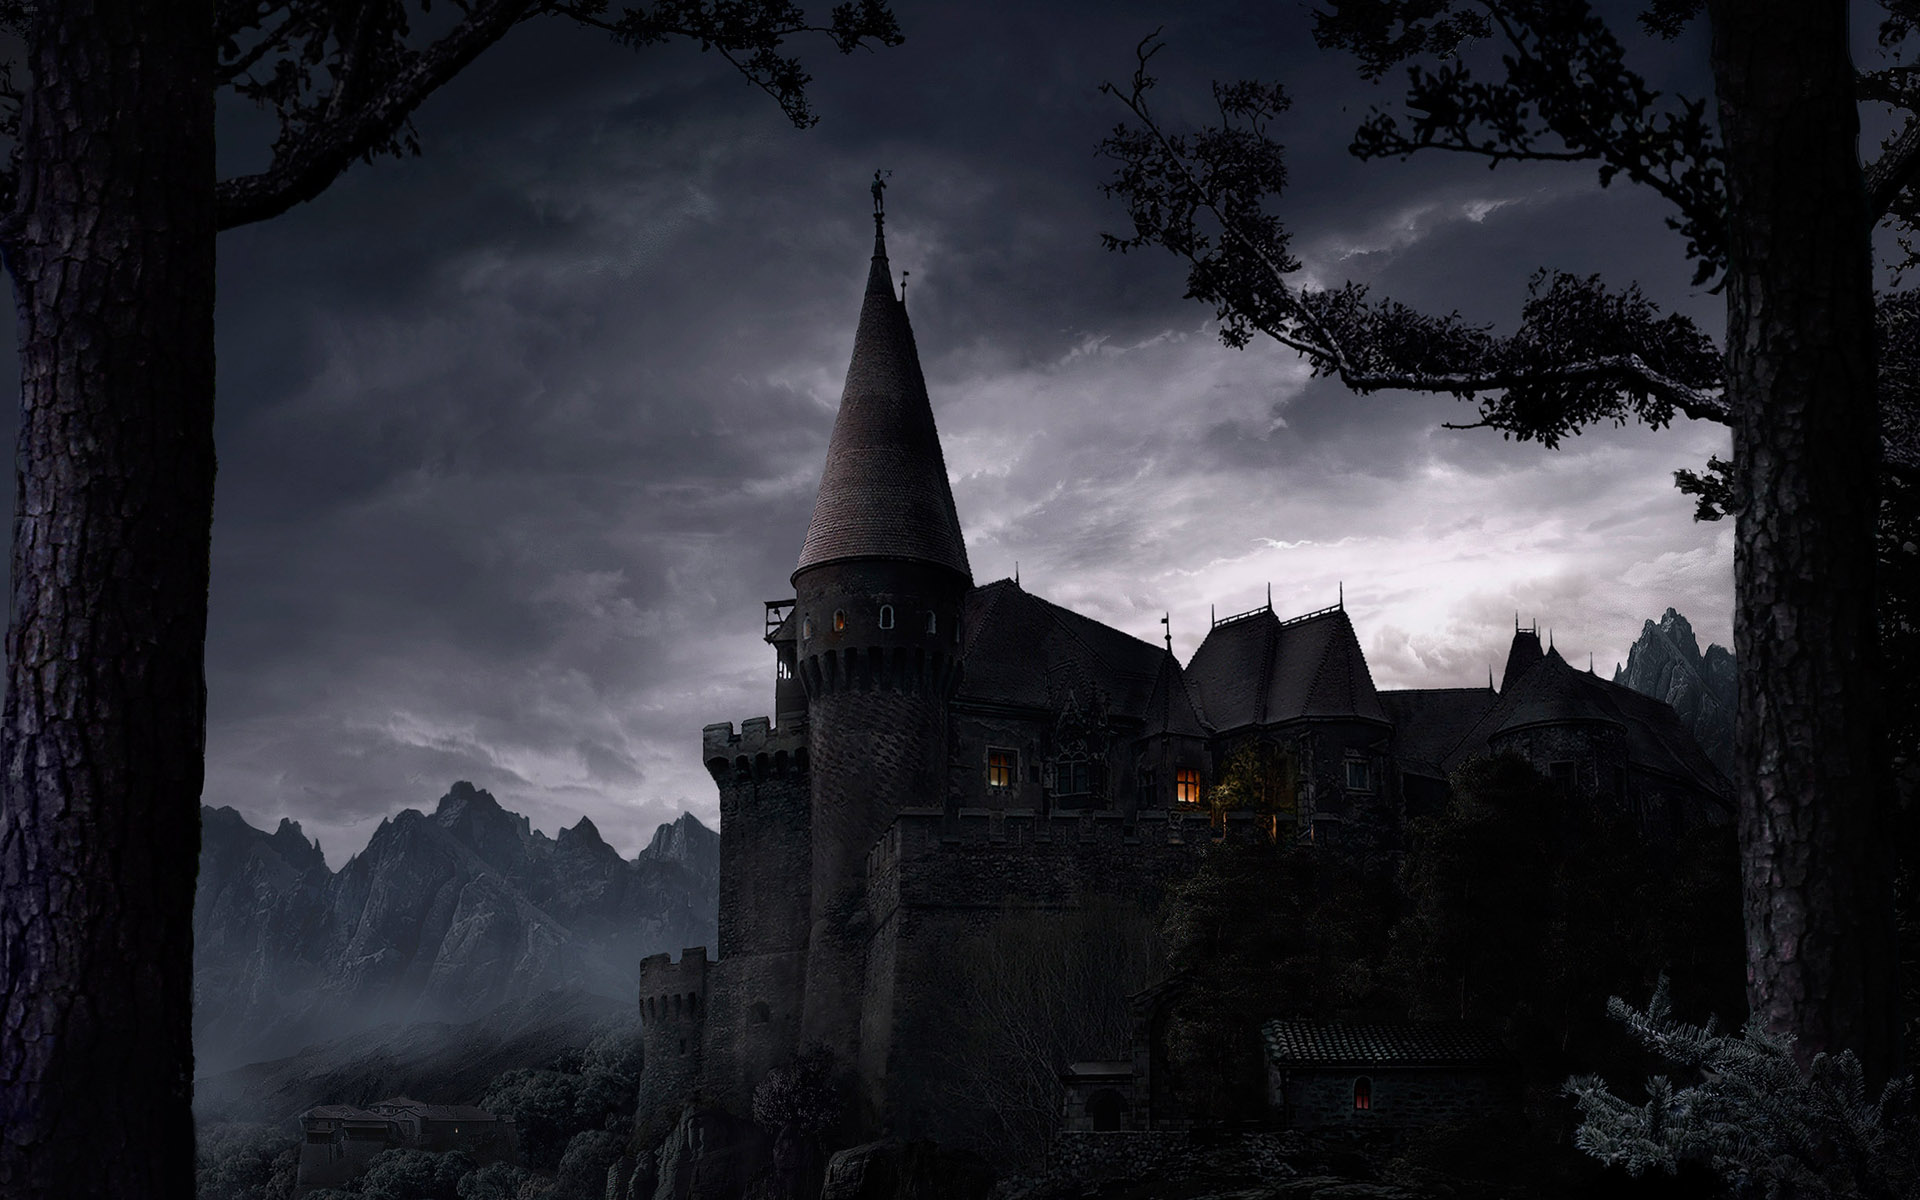 Dark and majestic castle overlooking a moonlit landscape